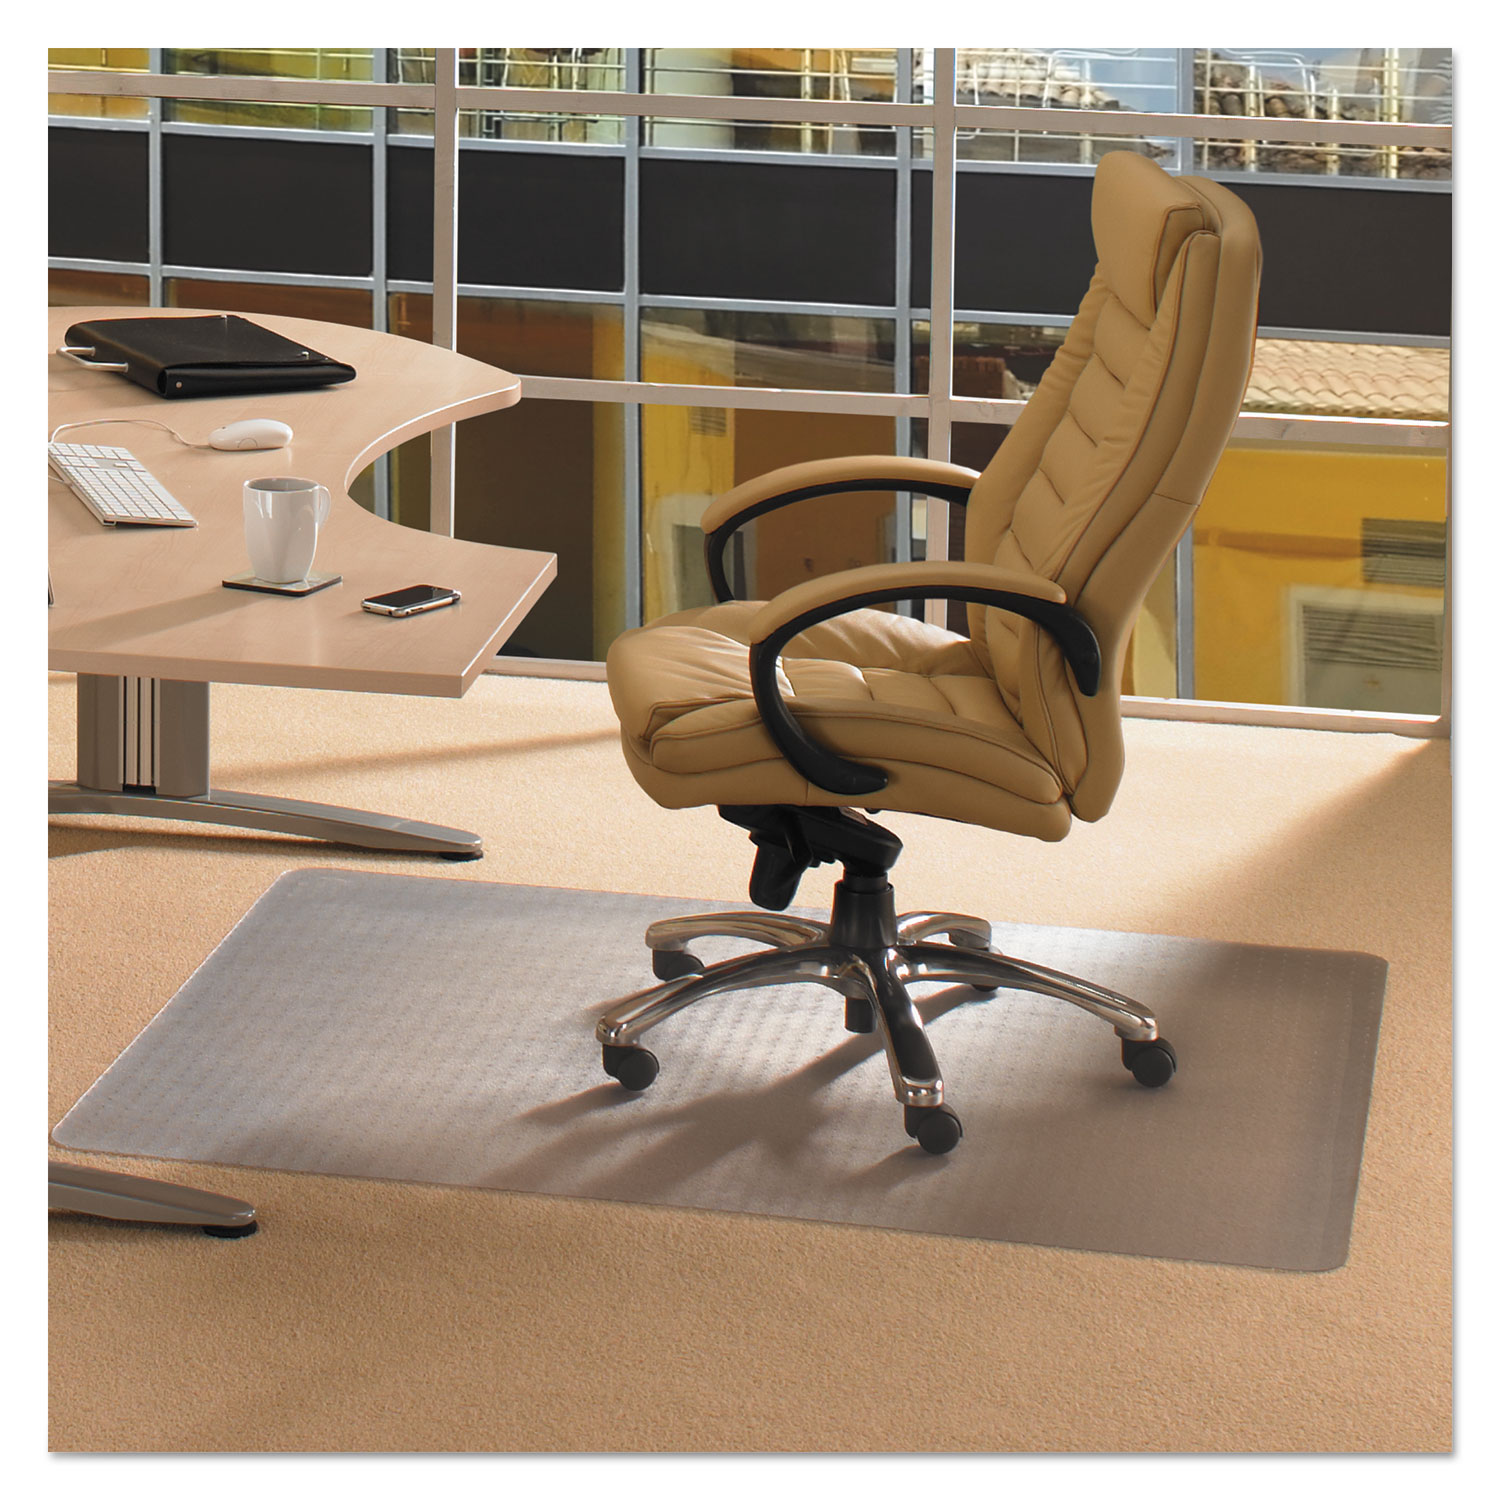  Floortex PF119225EV Cleartex Advantagemat Phthalate Free PVC Chair Mat for Low Pile Carpet, 48 x 36, Clear (FLRPF119225EV) 